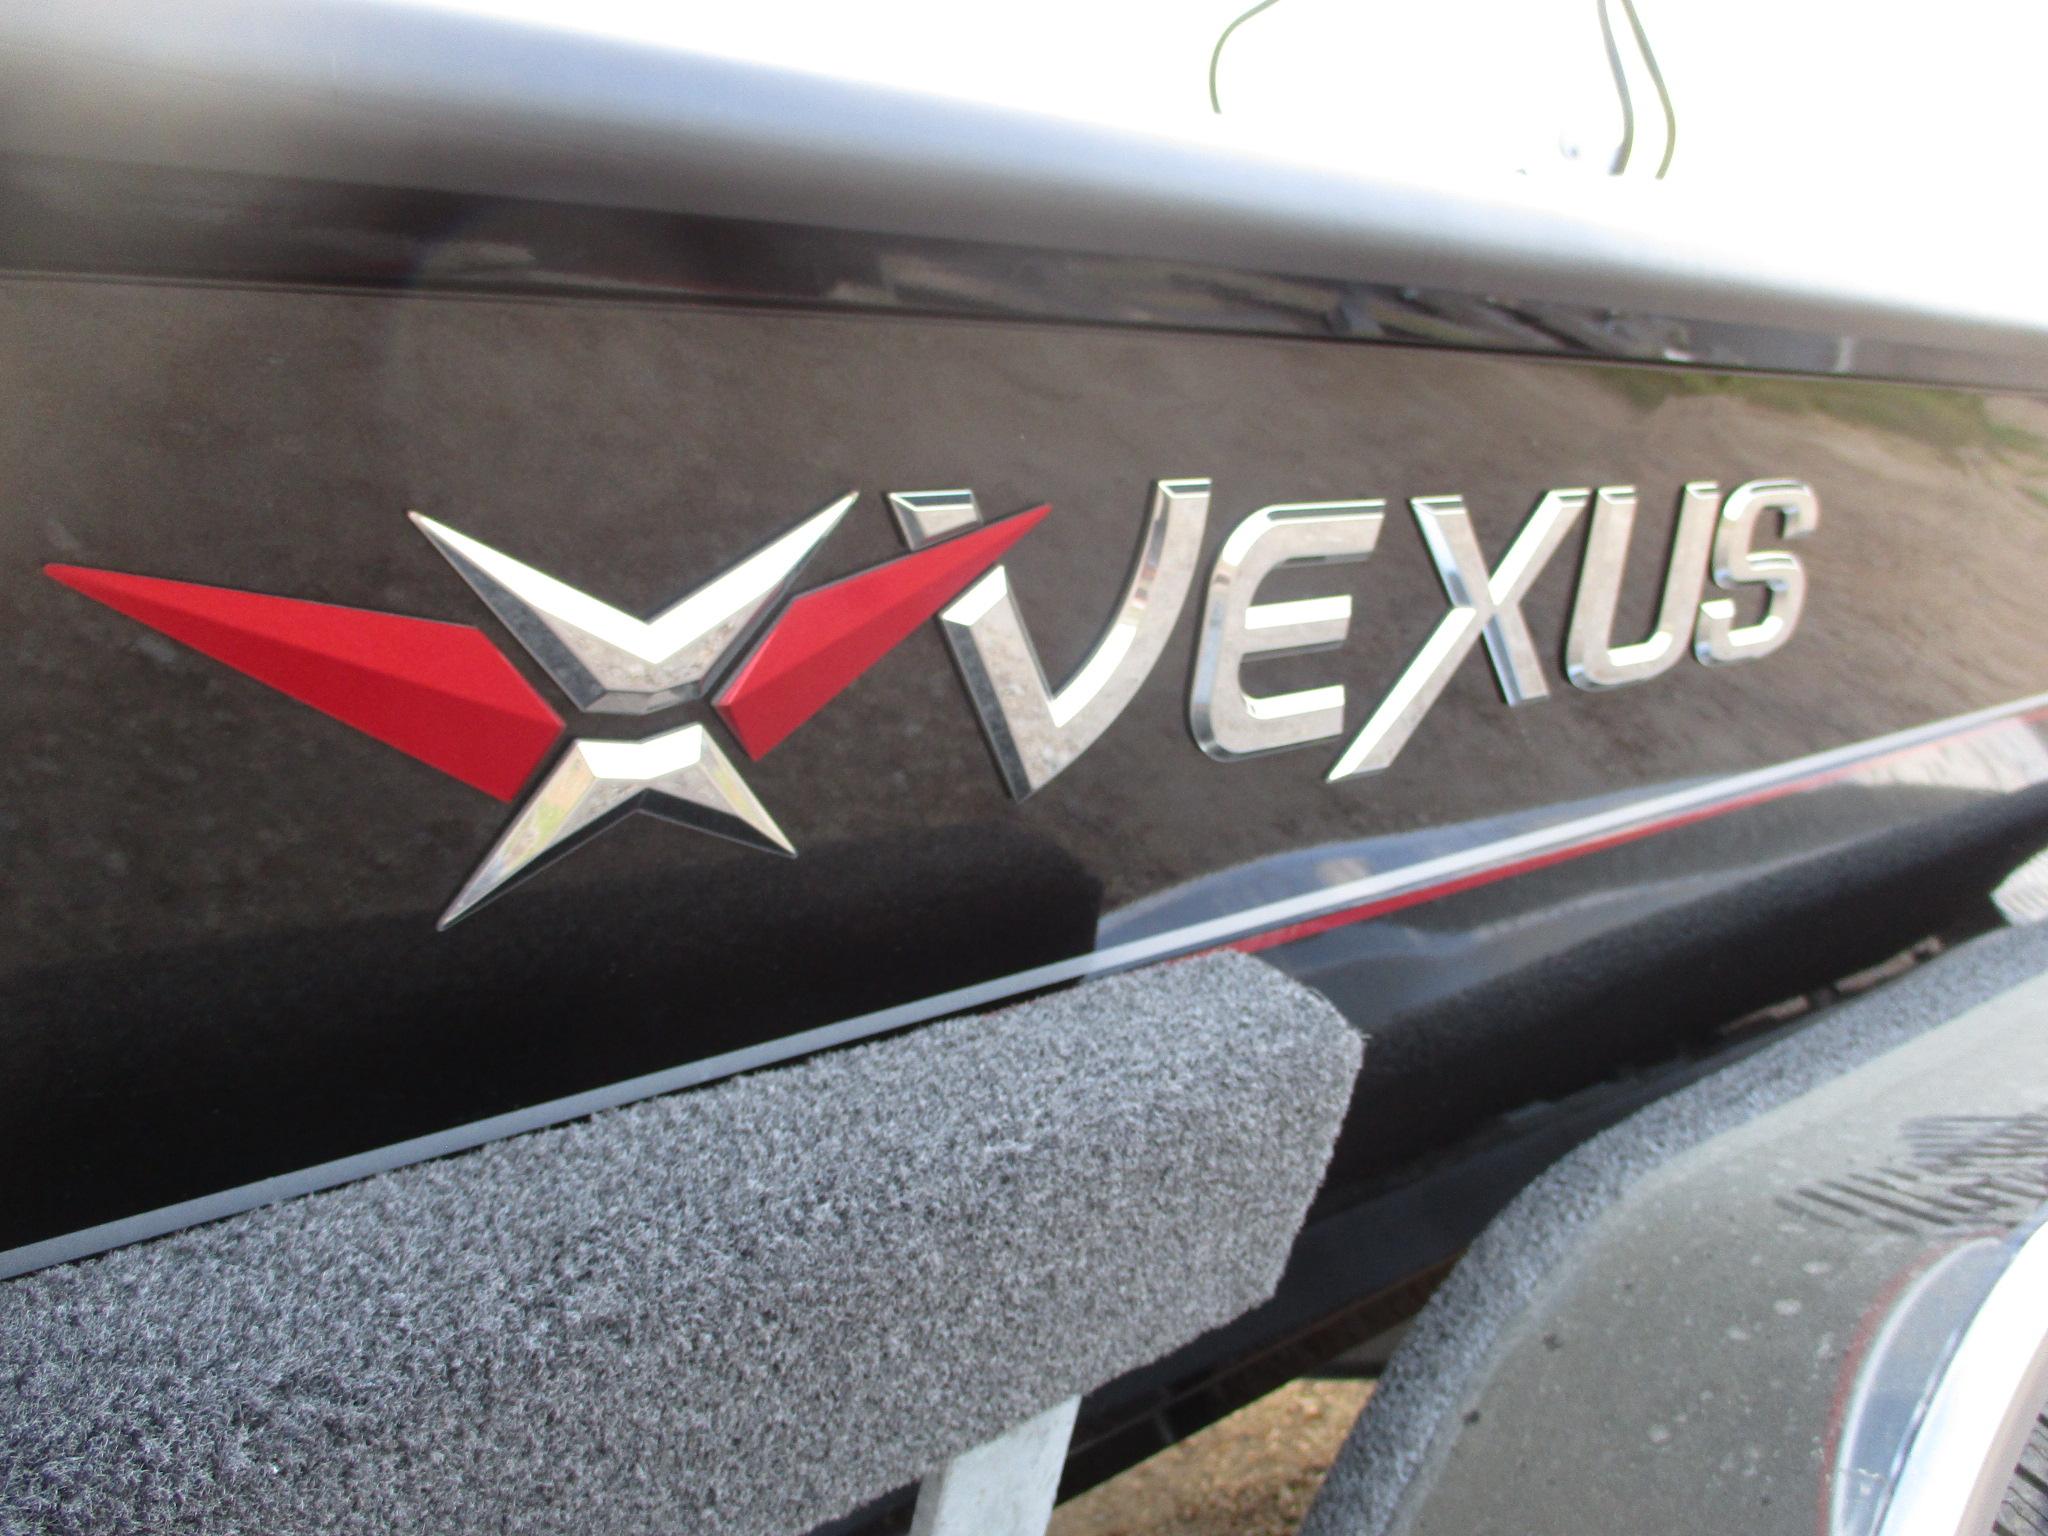 New  2022 20' Vexus 2180CC Aluminum Fish Boat in Slidell, Louisiana